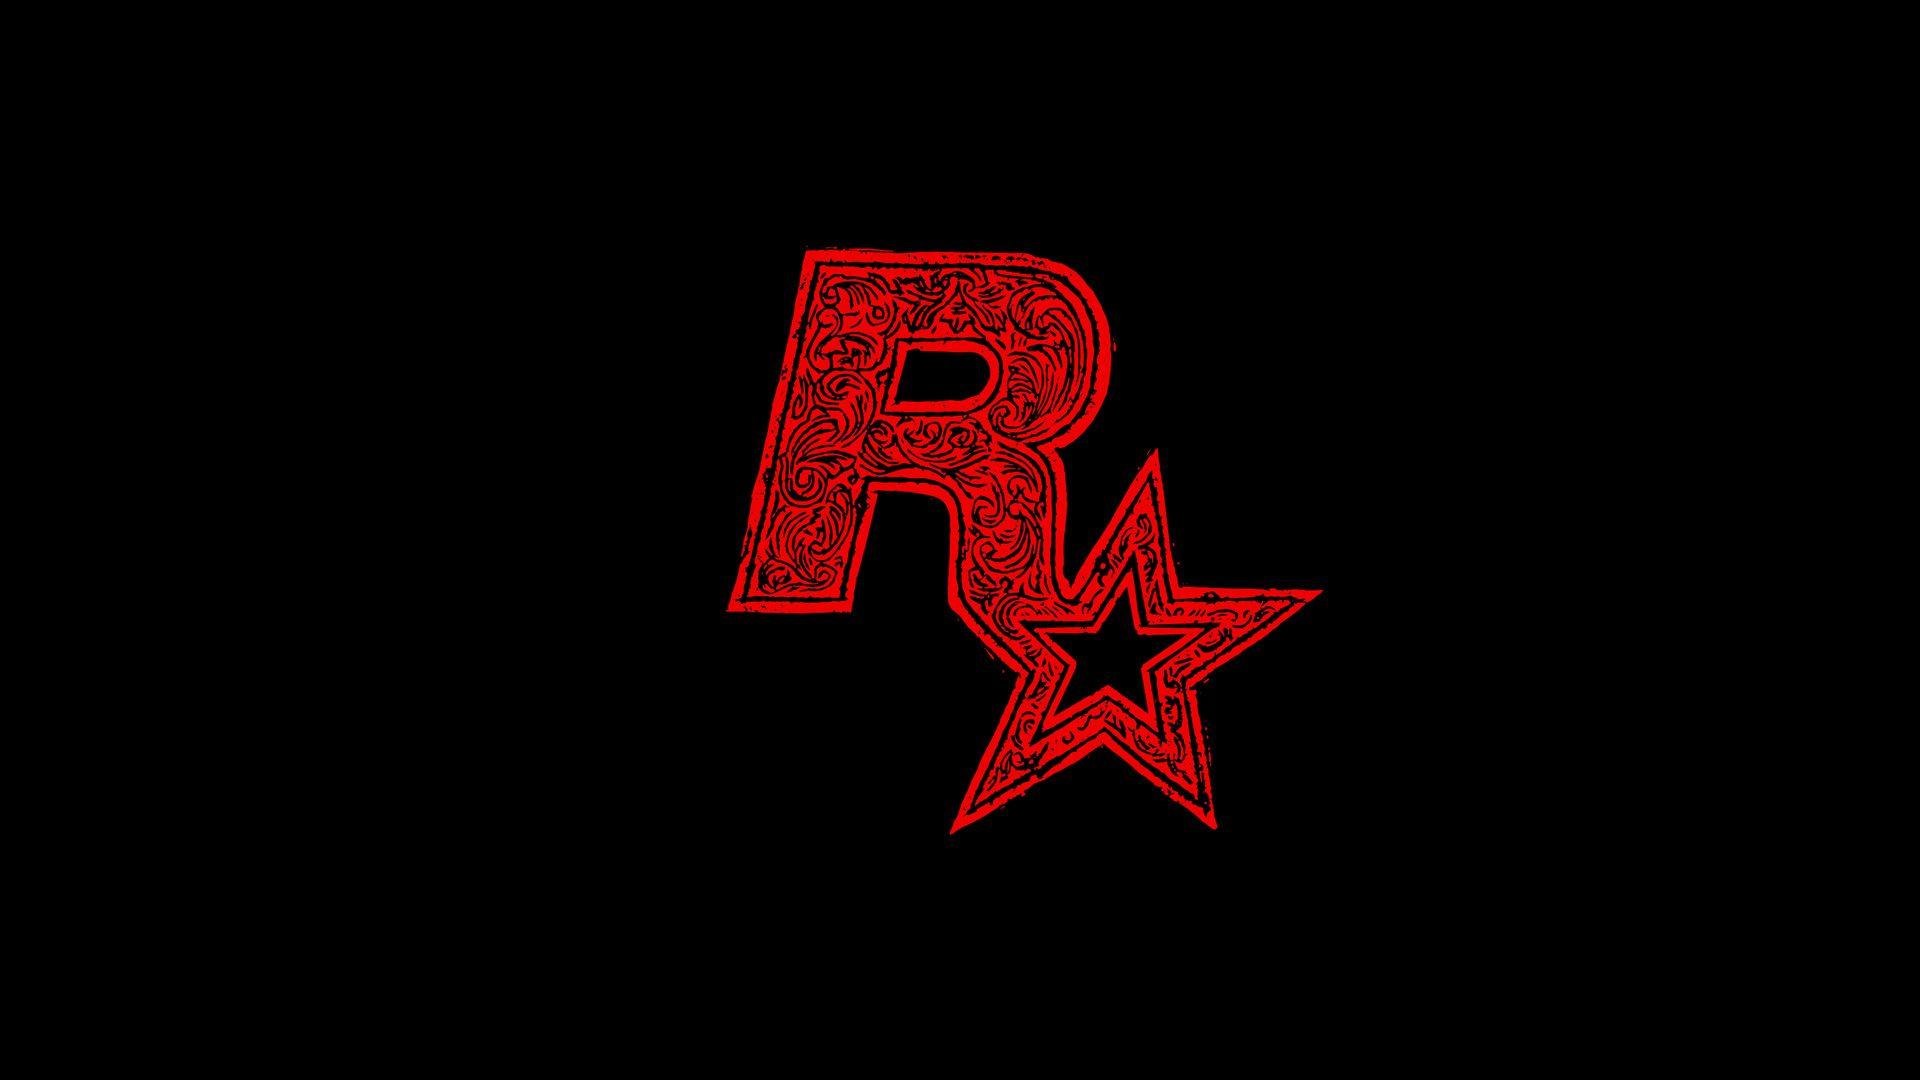 Rockstar Logo - Enter to Win the Black Linocut Rockstar Games Logo T-Shirt